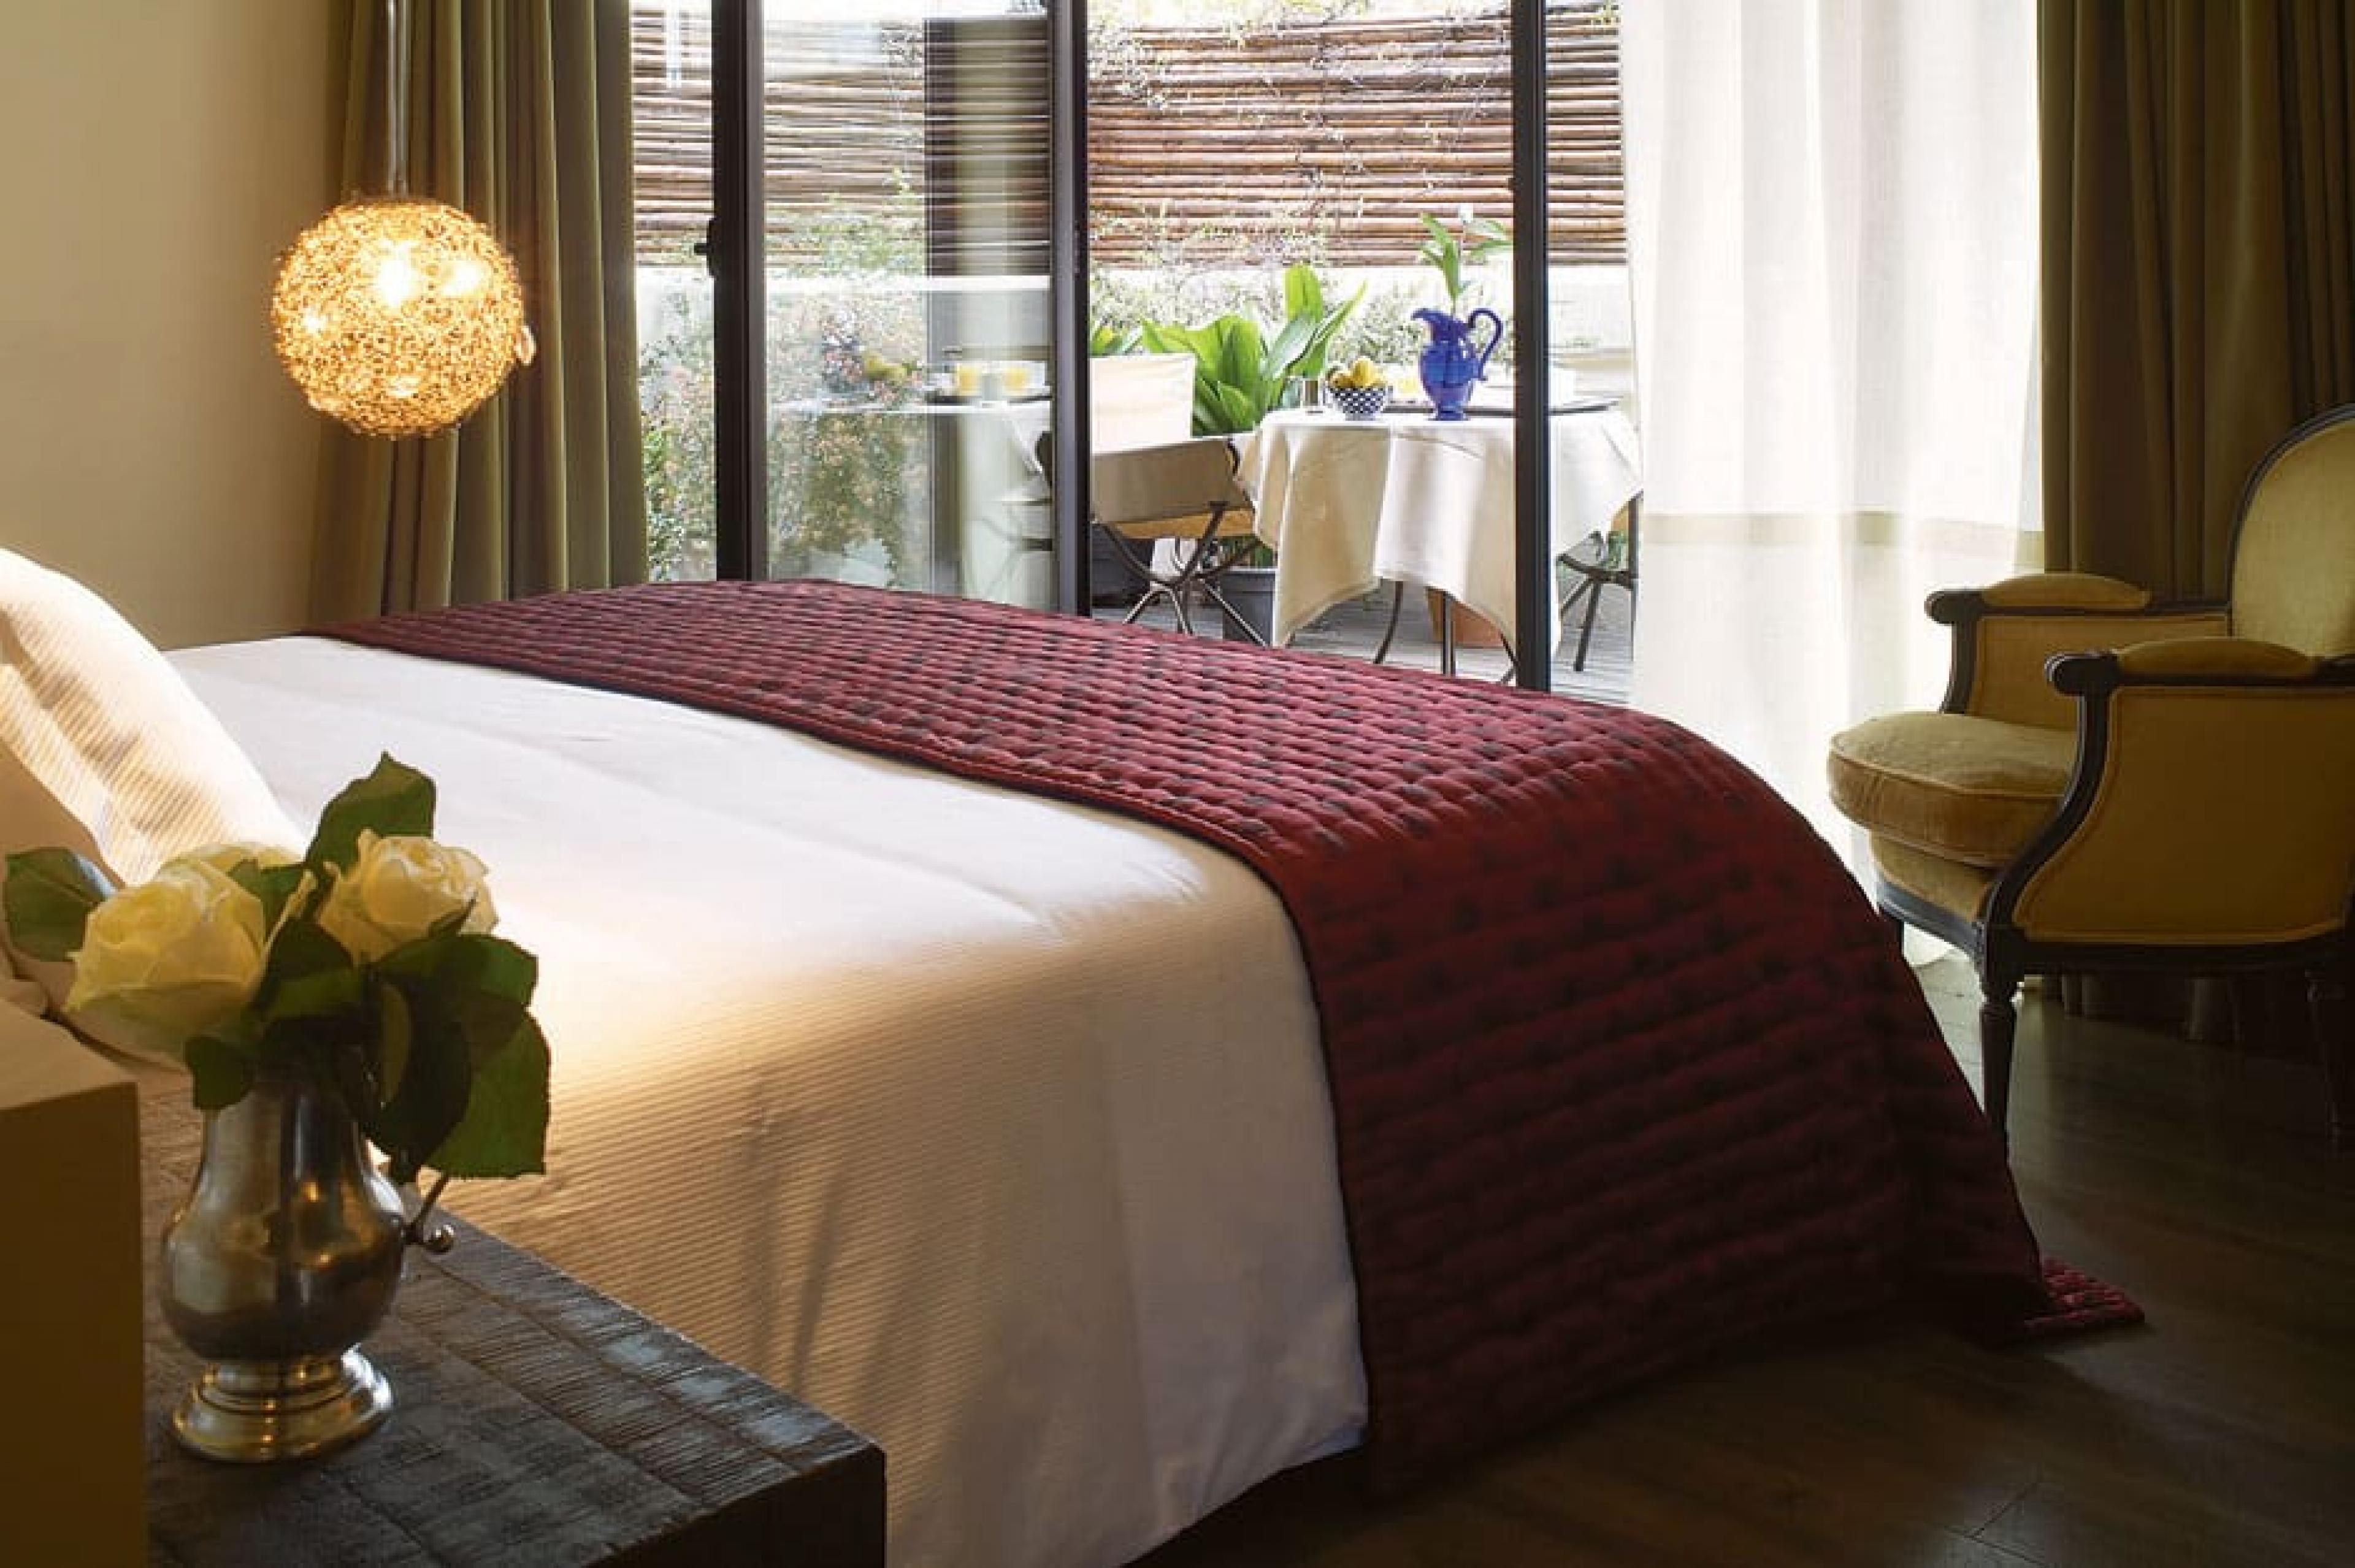 Junior Suite with Terrace at Hotel Neri, Barcelona, Spain - courtesy Hotel Neri Junior suite with terrace